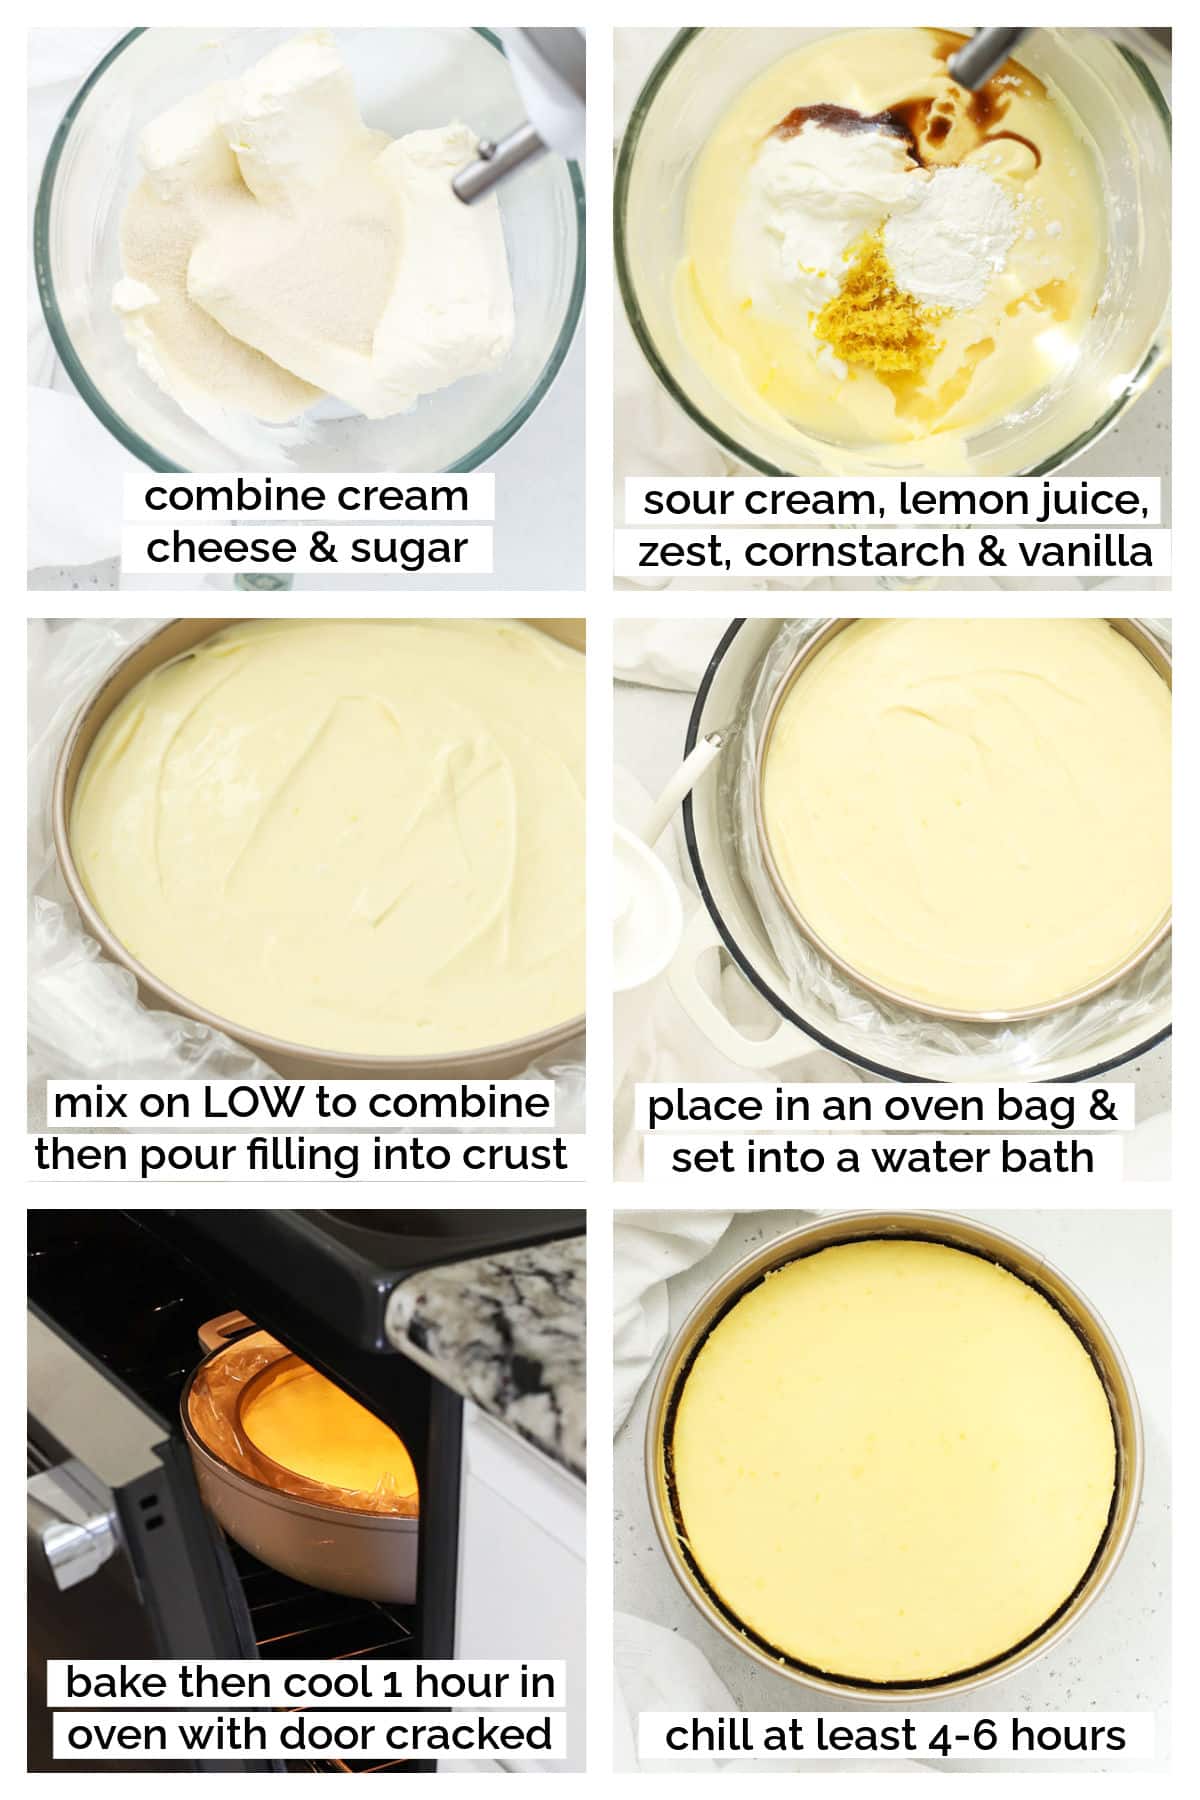 making gluten-free lemon cheesecake step by step